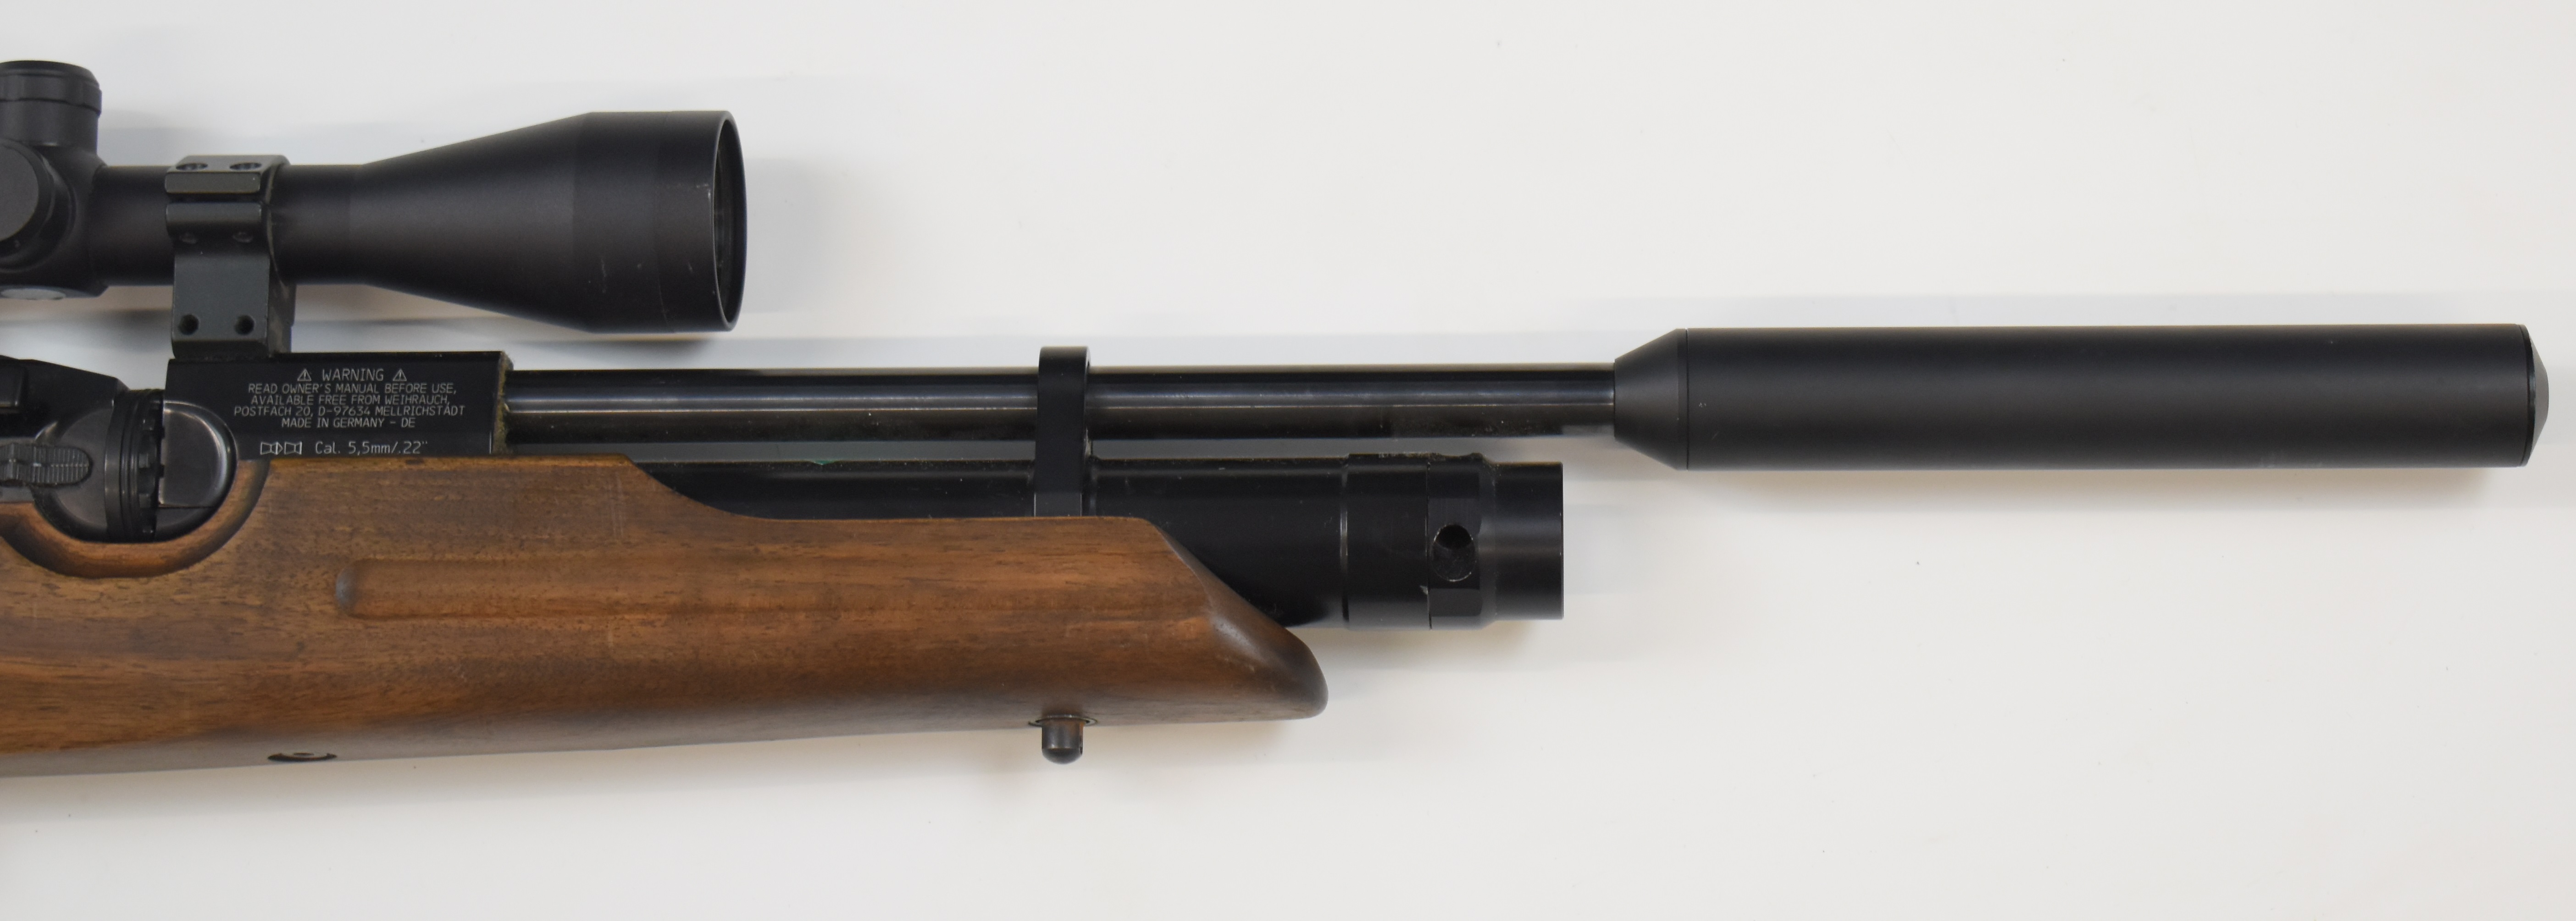 Weihrauch HW100 .22 PCP air rifle with textured semi-pistol grip, raised cheek piece, adjustable - Image 5 of 11